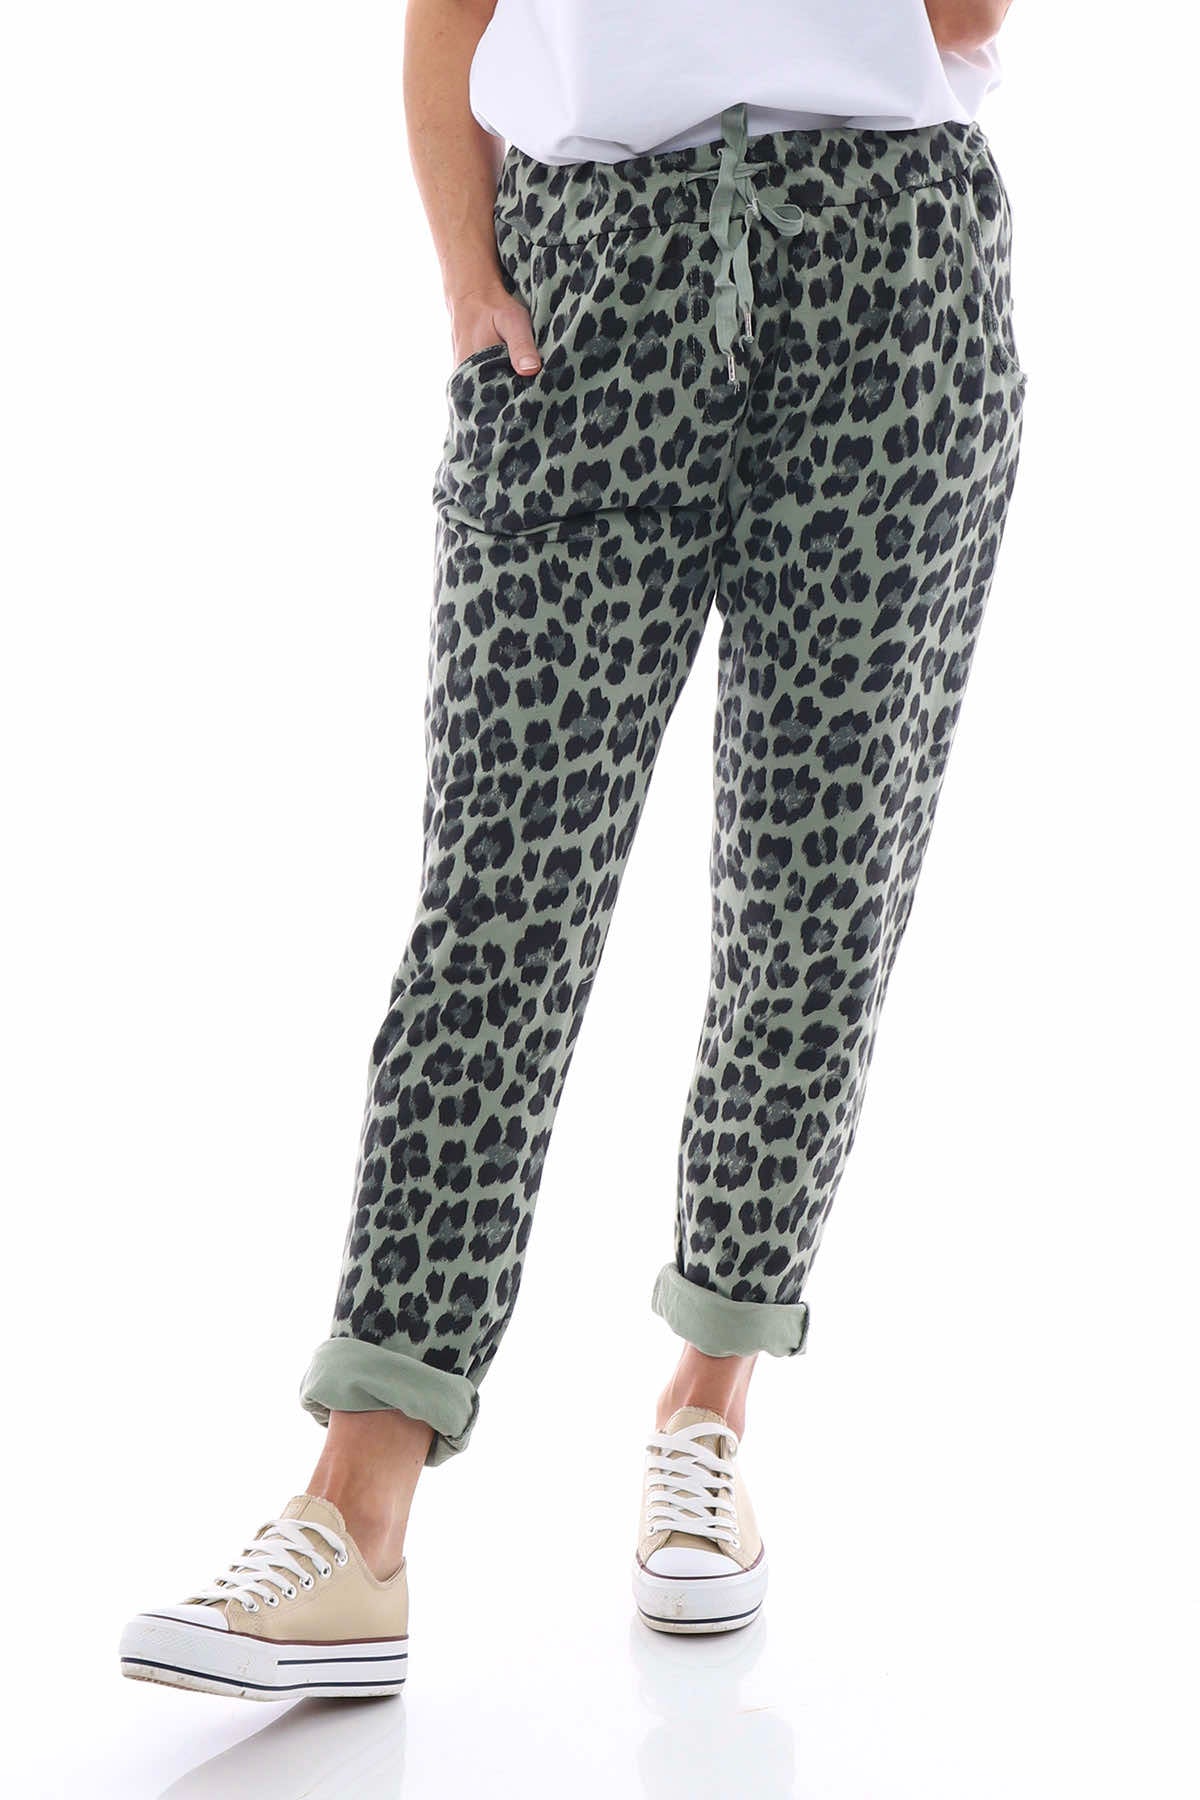 Minskip Leopard Print Jersey Pants Light Khaki